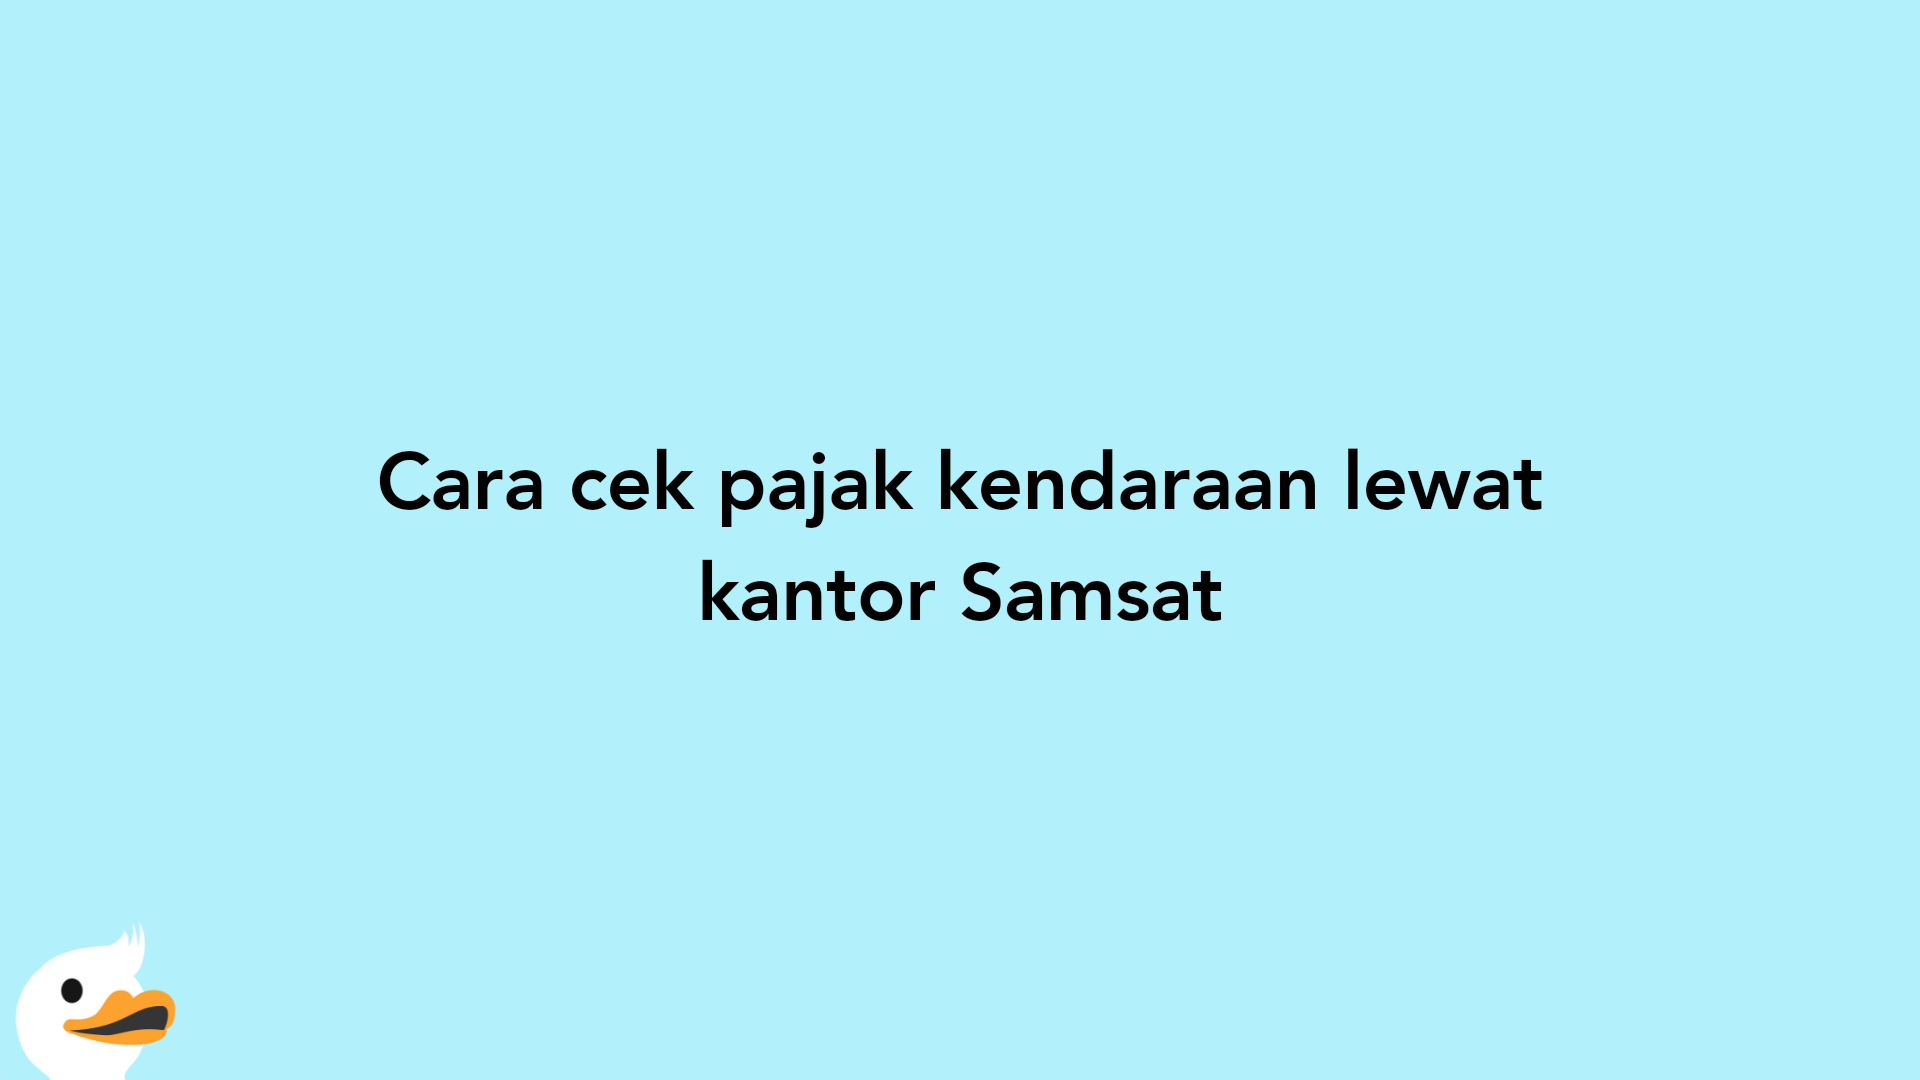 Cara cek pajak kendaraan lewat kantor Samsat